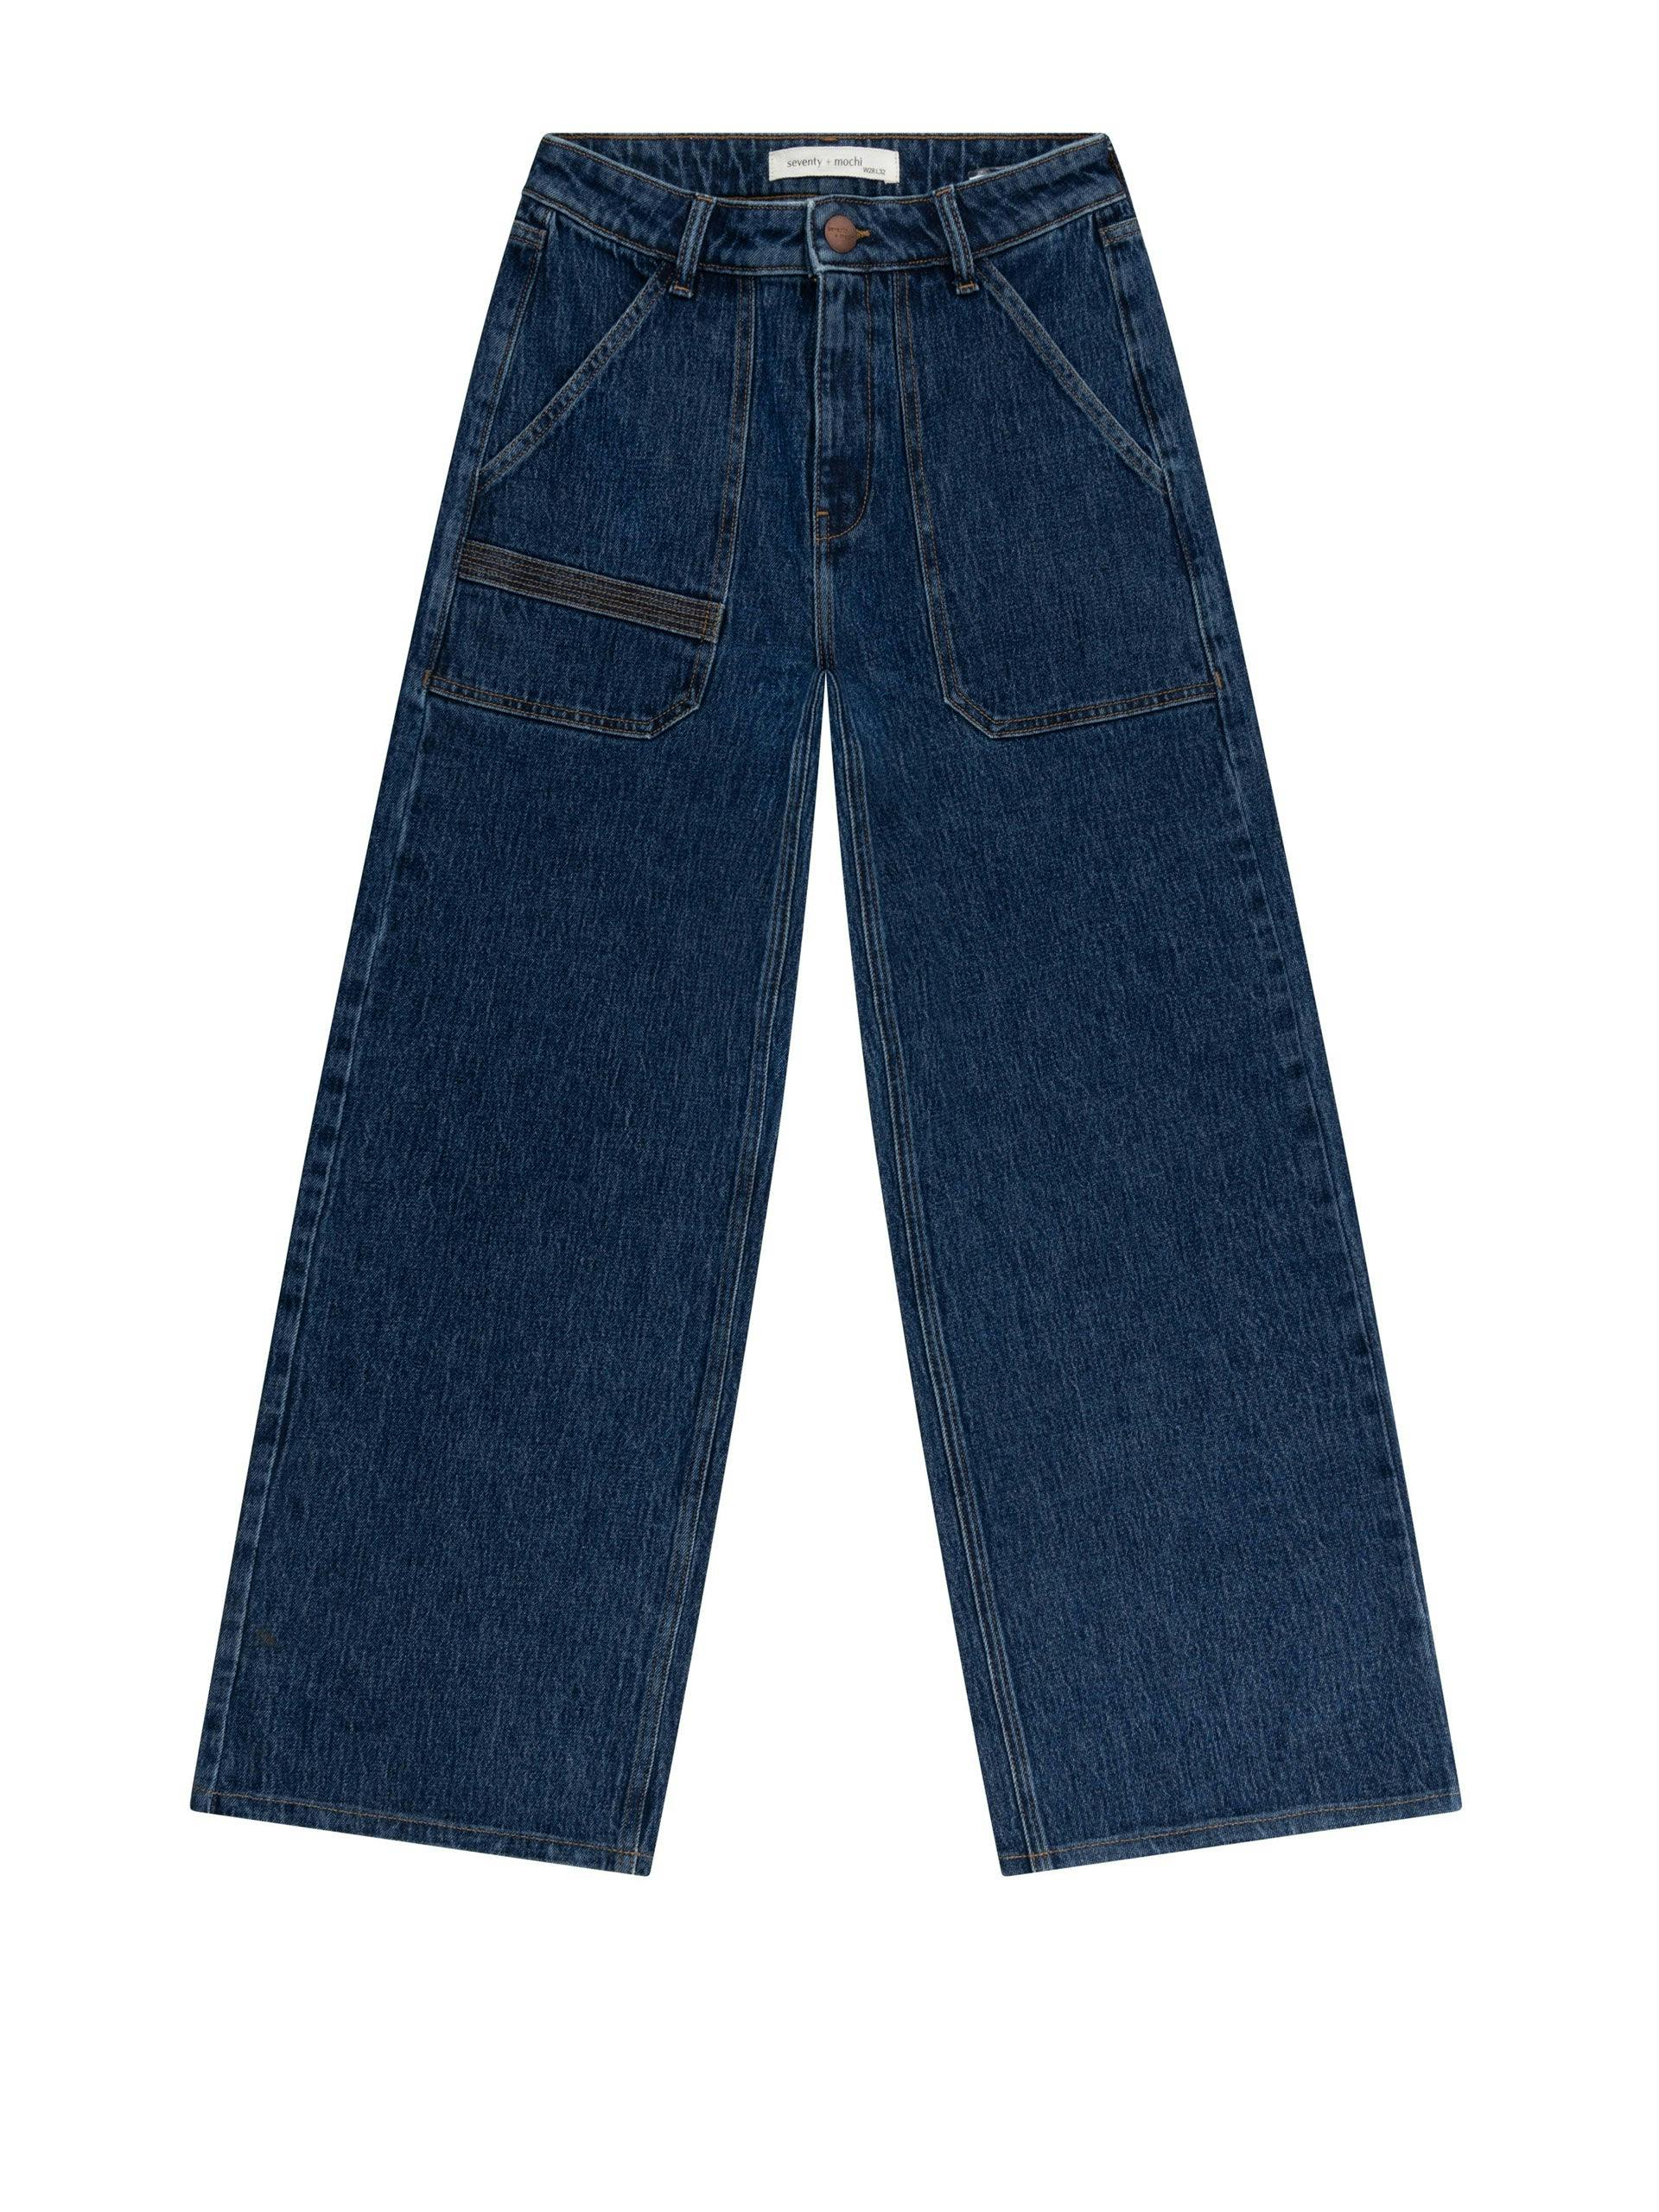 Elodie jeans in Americana blue denim